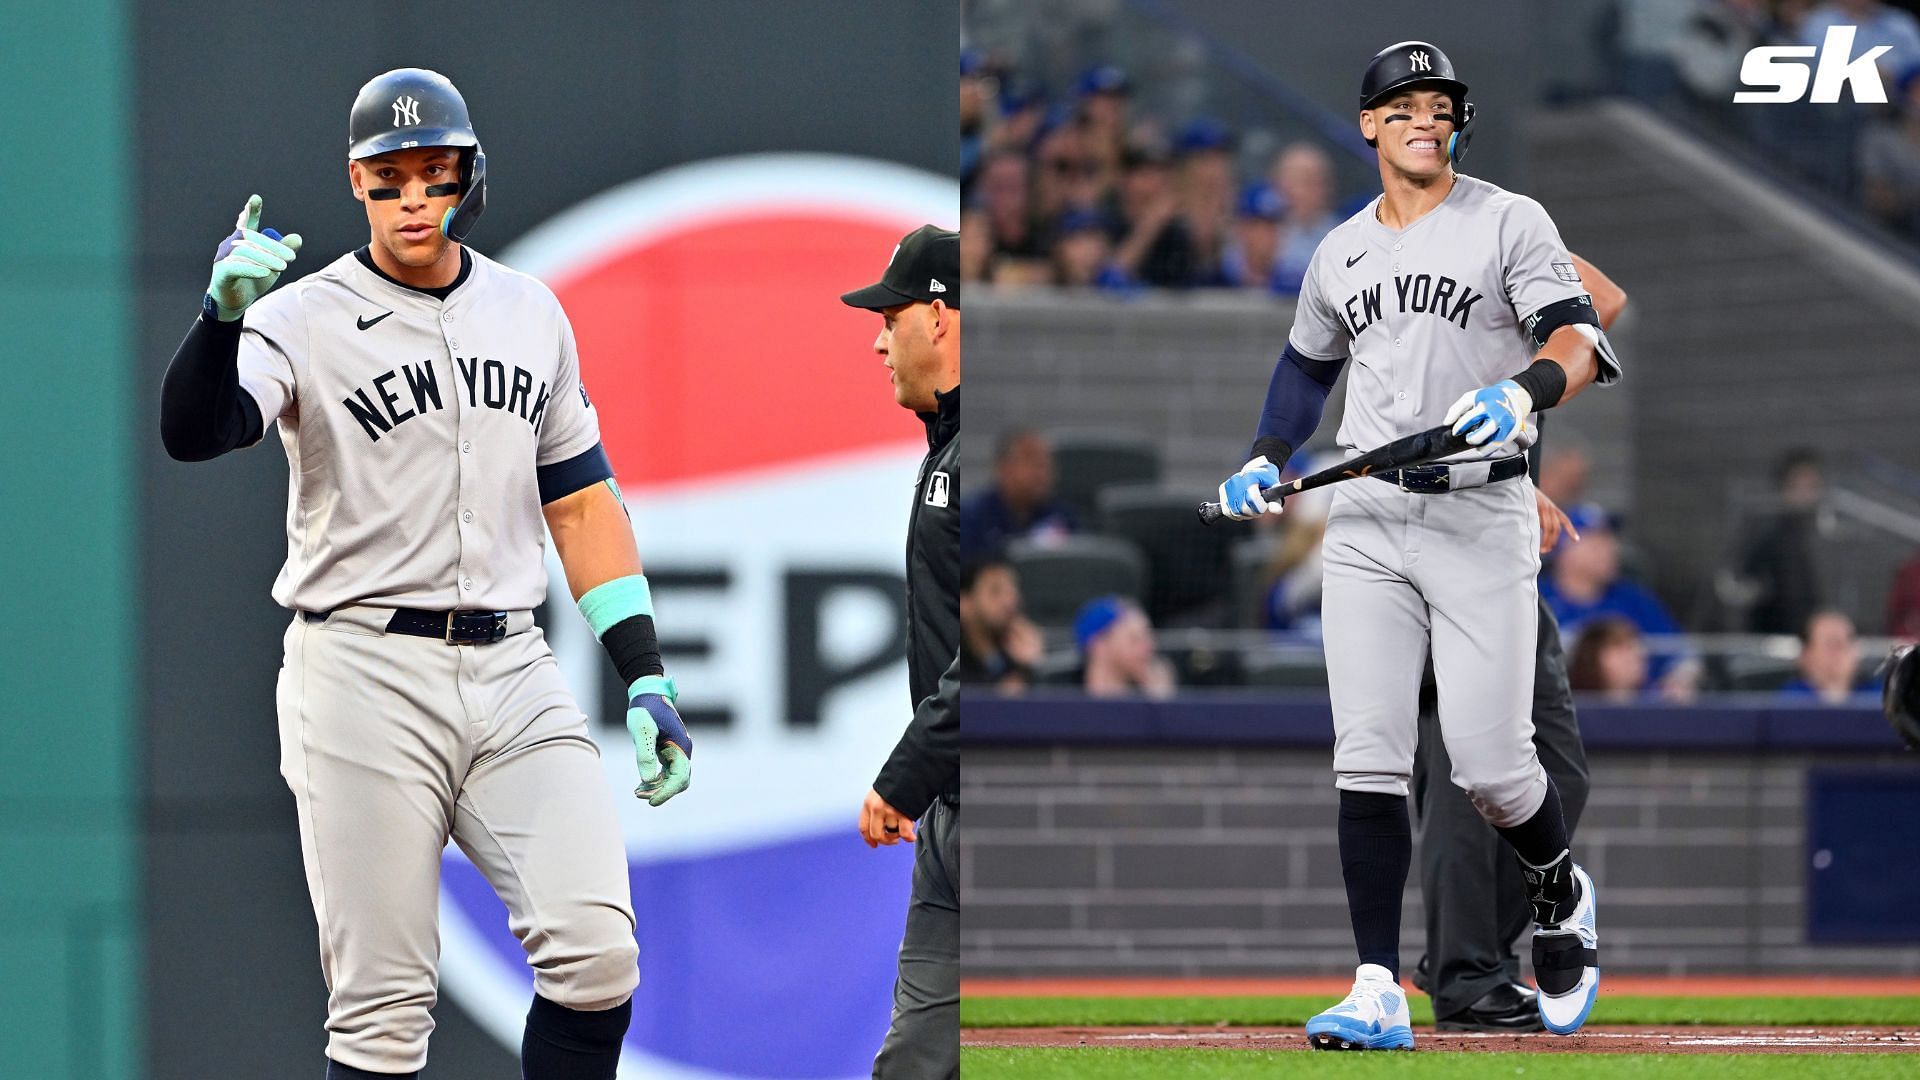 Yankees captain Aaron Judge emphasizes staying aggressive amidst hitting struggles